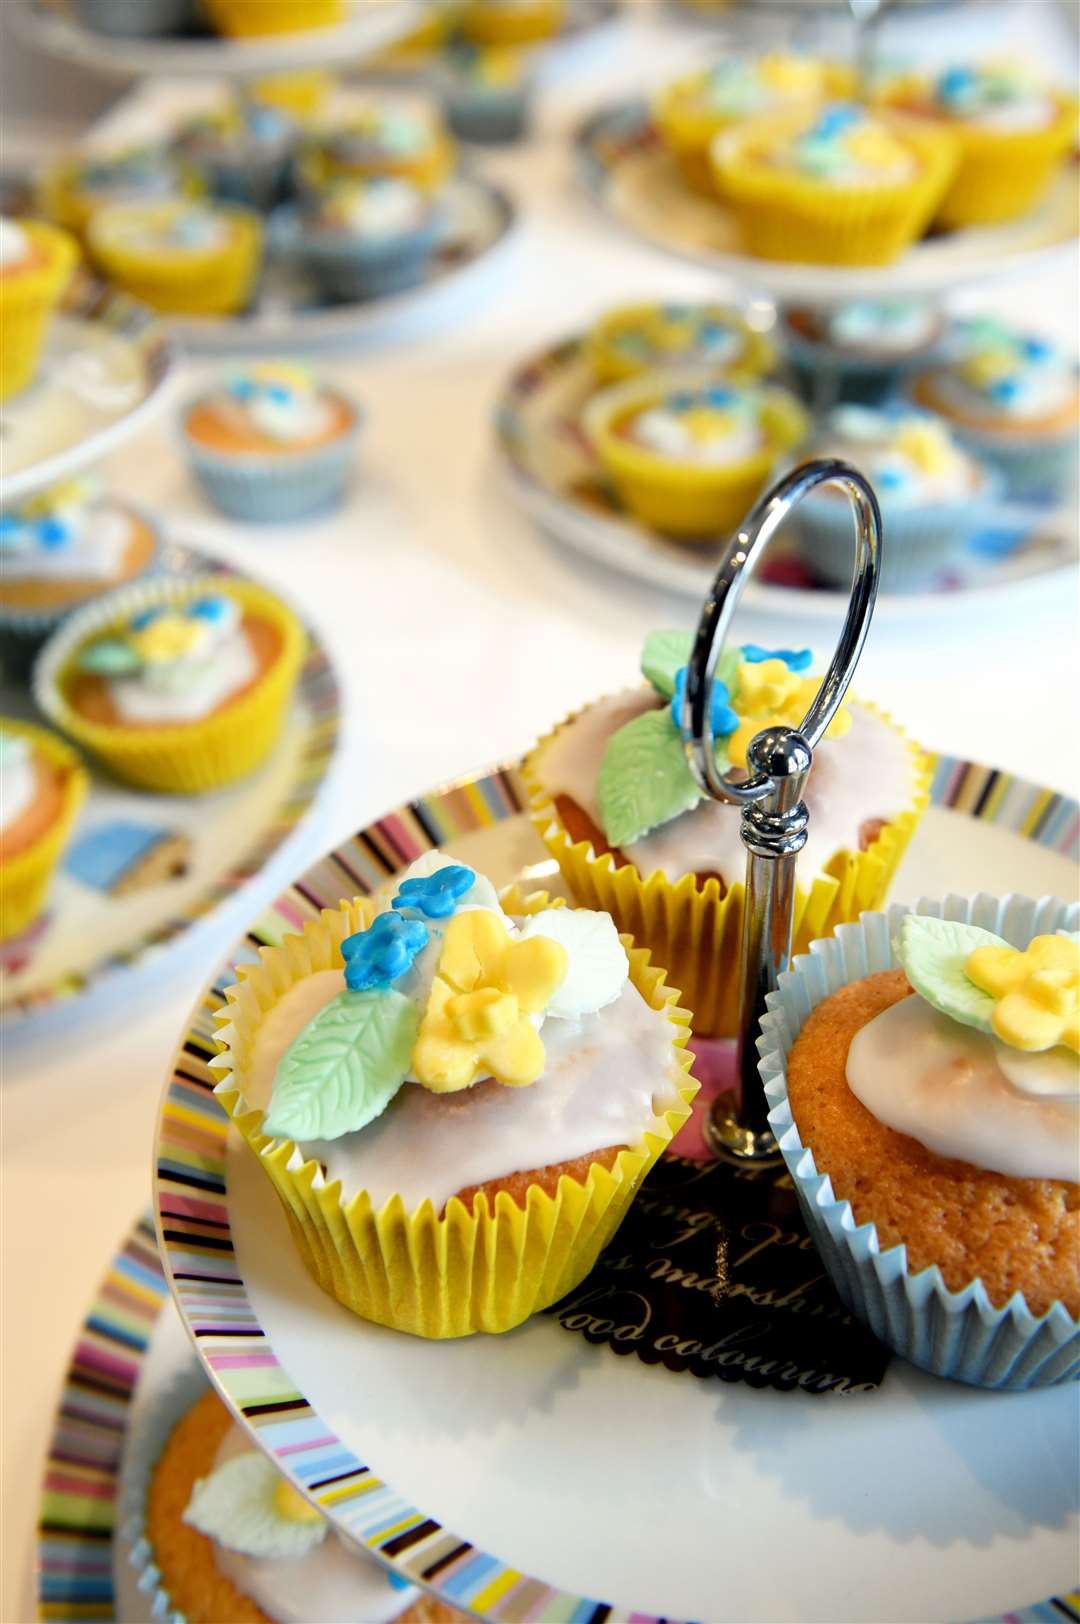 Cupcakes. Picture: James Mackenzie